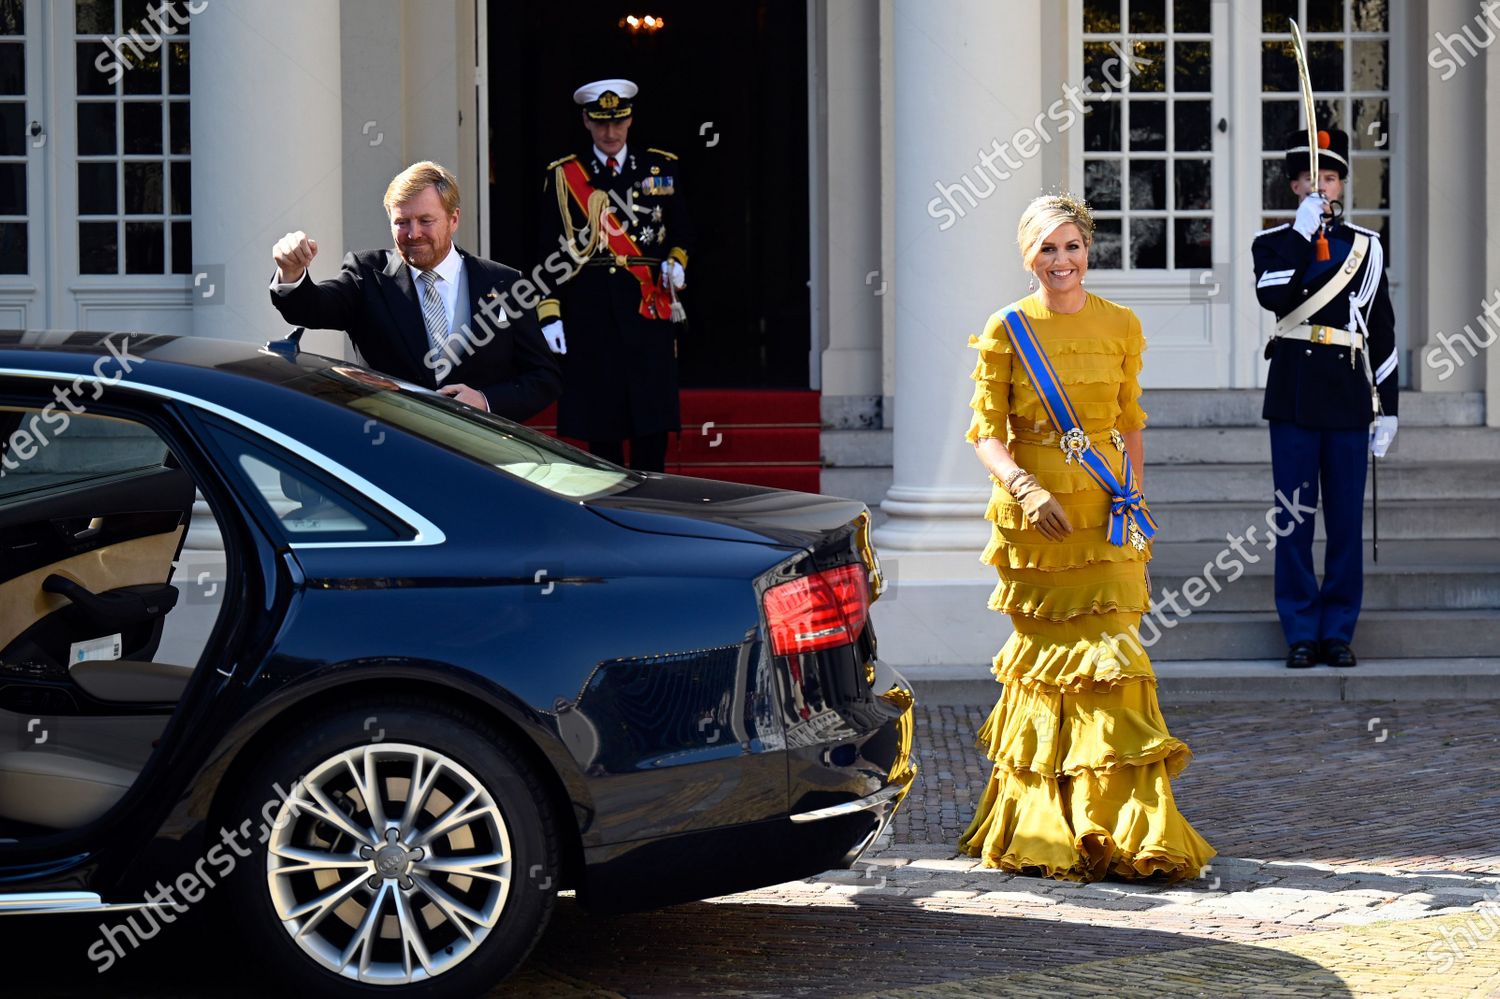 prinsjesdag-ceremony-the-hague-the-netherlands-shutterstock-editorial-10777335l.jpg